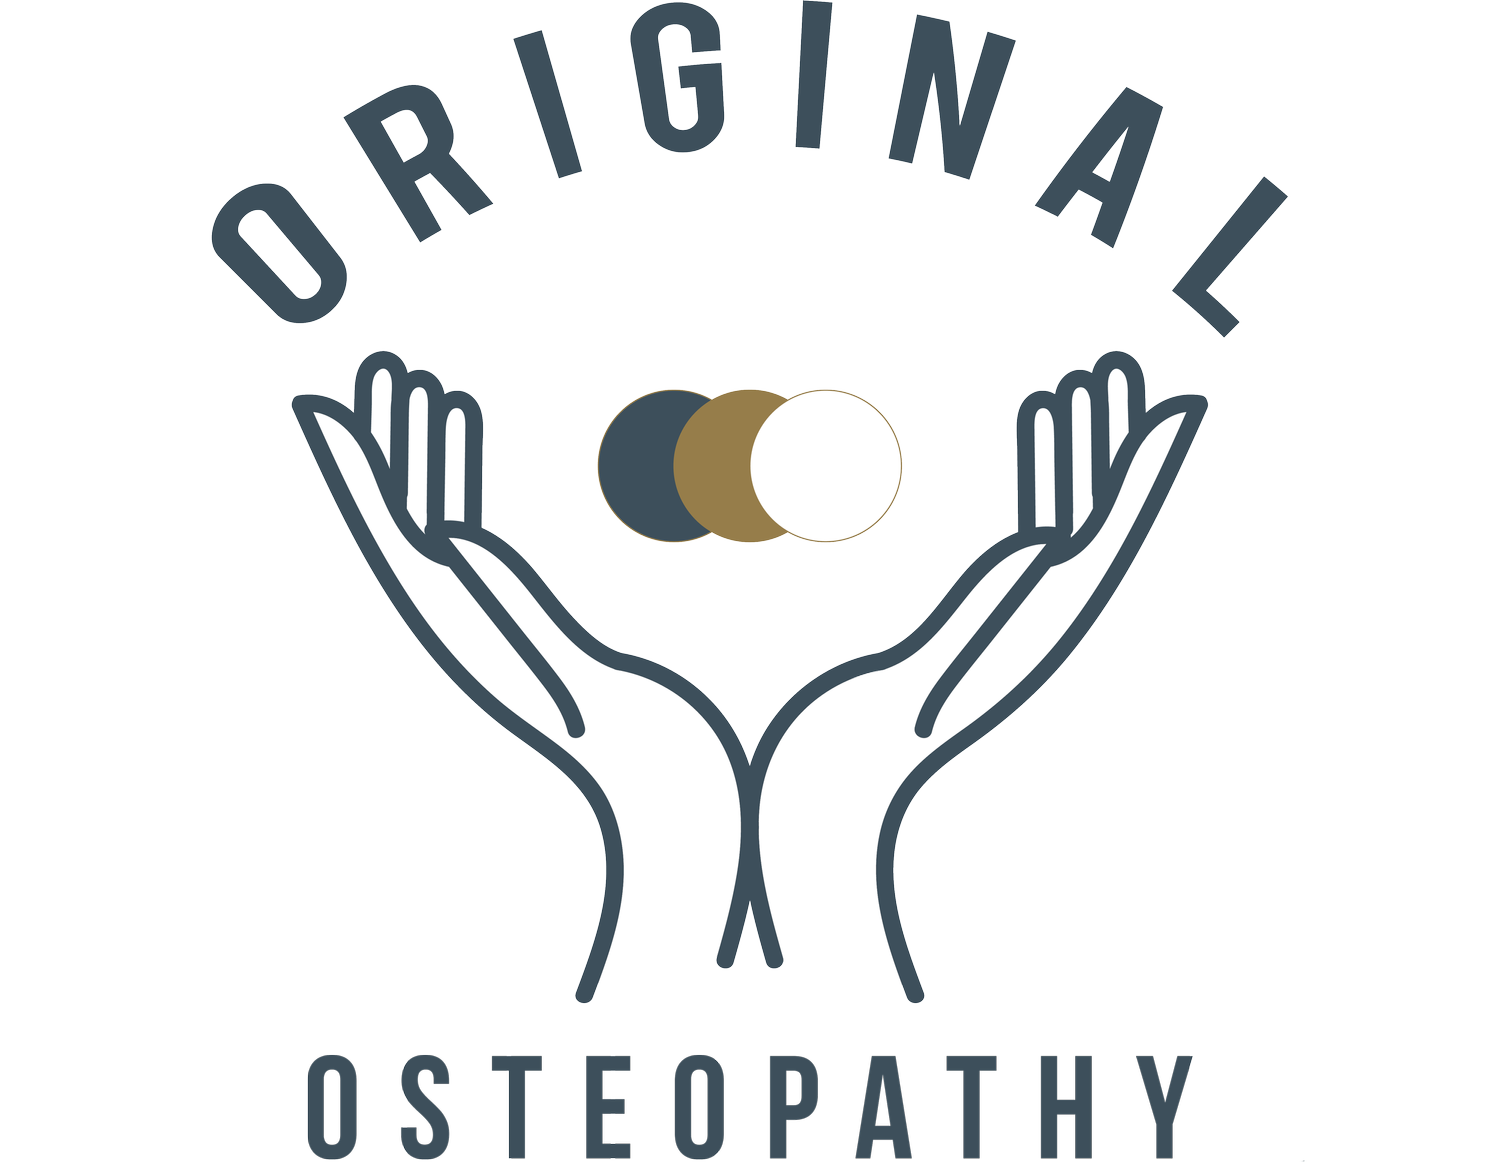 Original Osteopathy